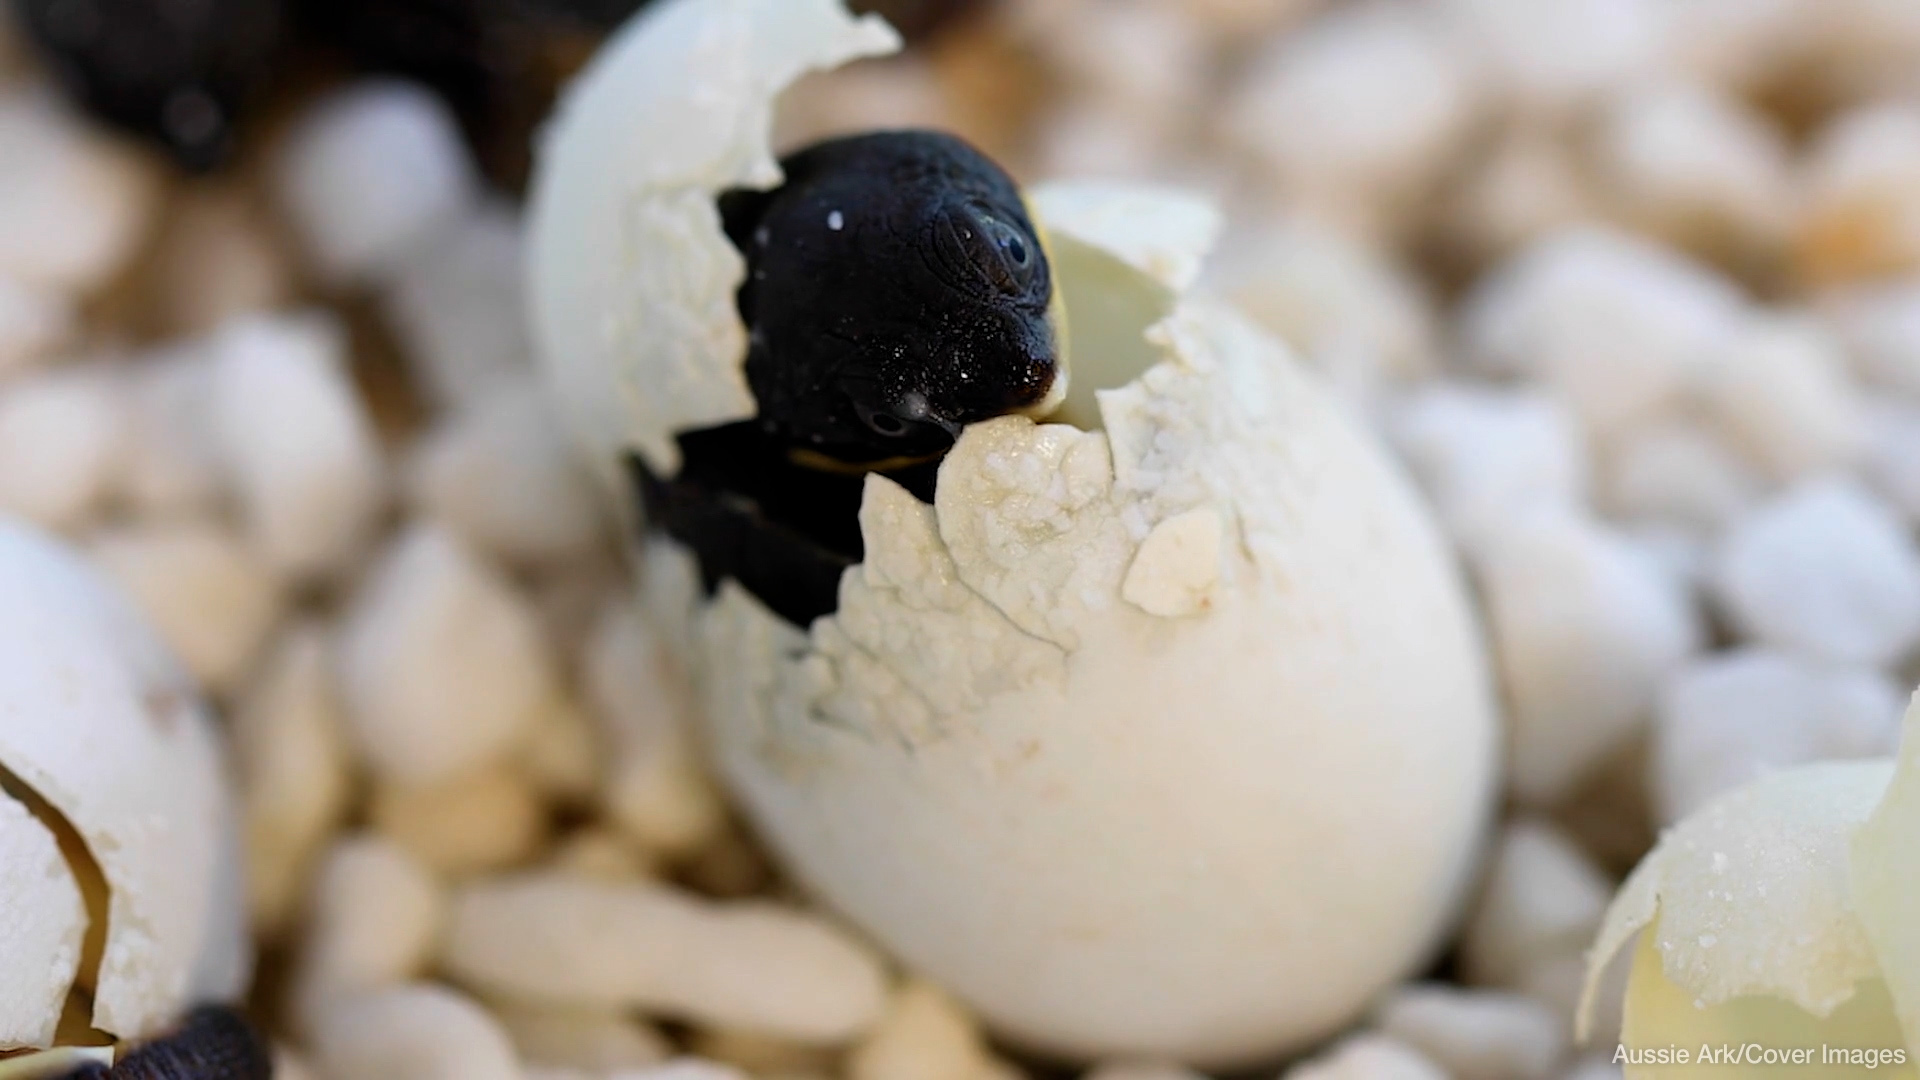 Endangered Freshwater Turtles Lay Over 100 Eggs In Australia Marking ...